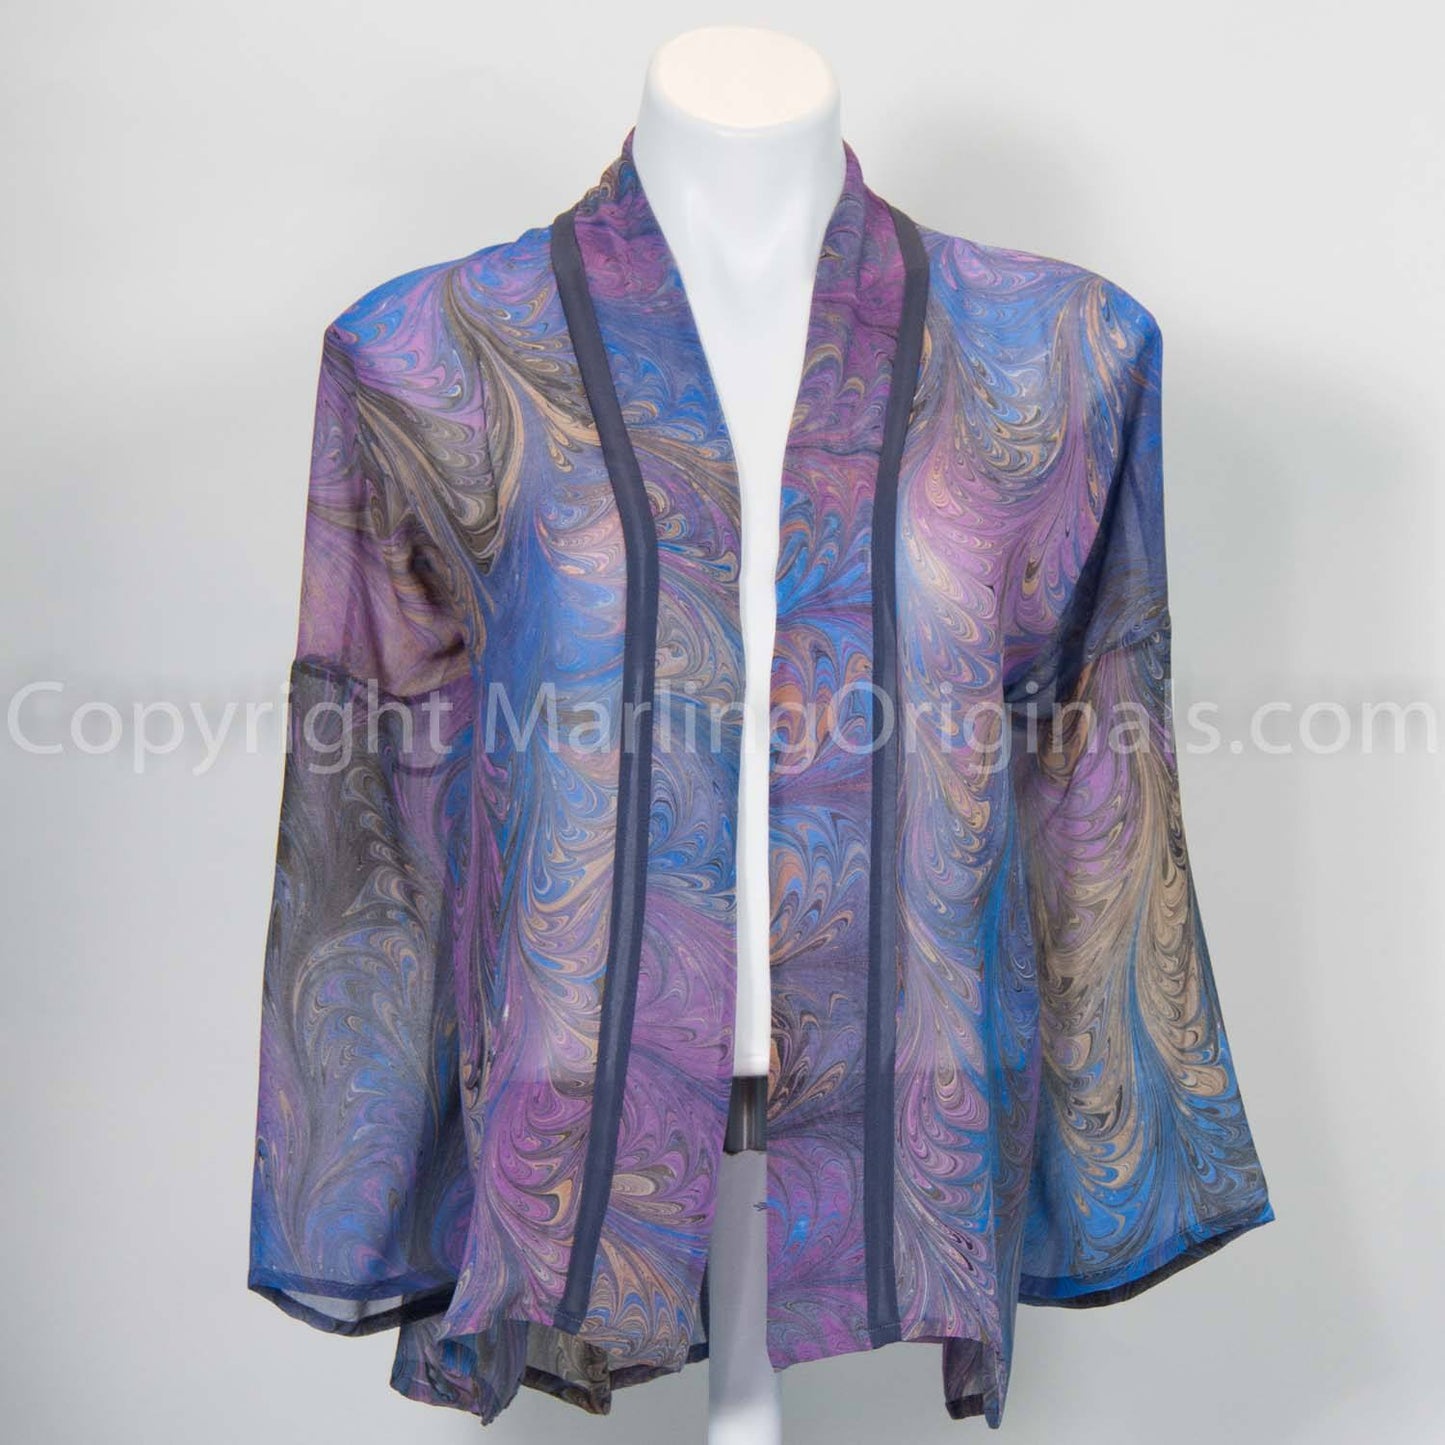 lavender marbled sheer silk kimono jacket. Long sleeves, solid chiffon trim down front band